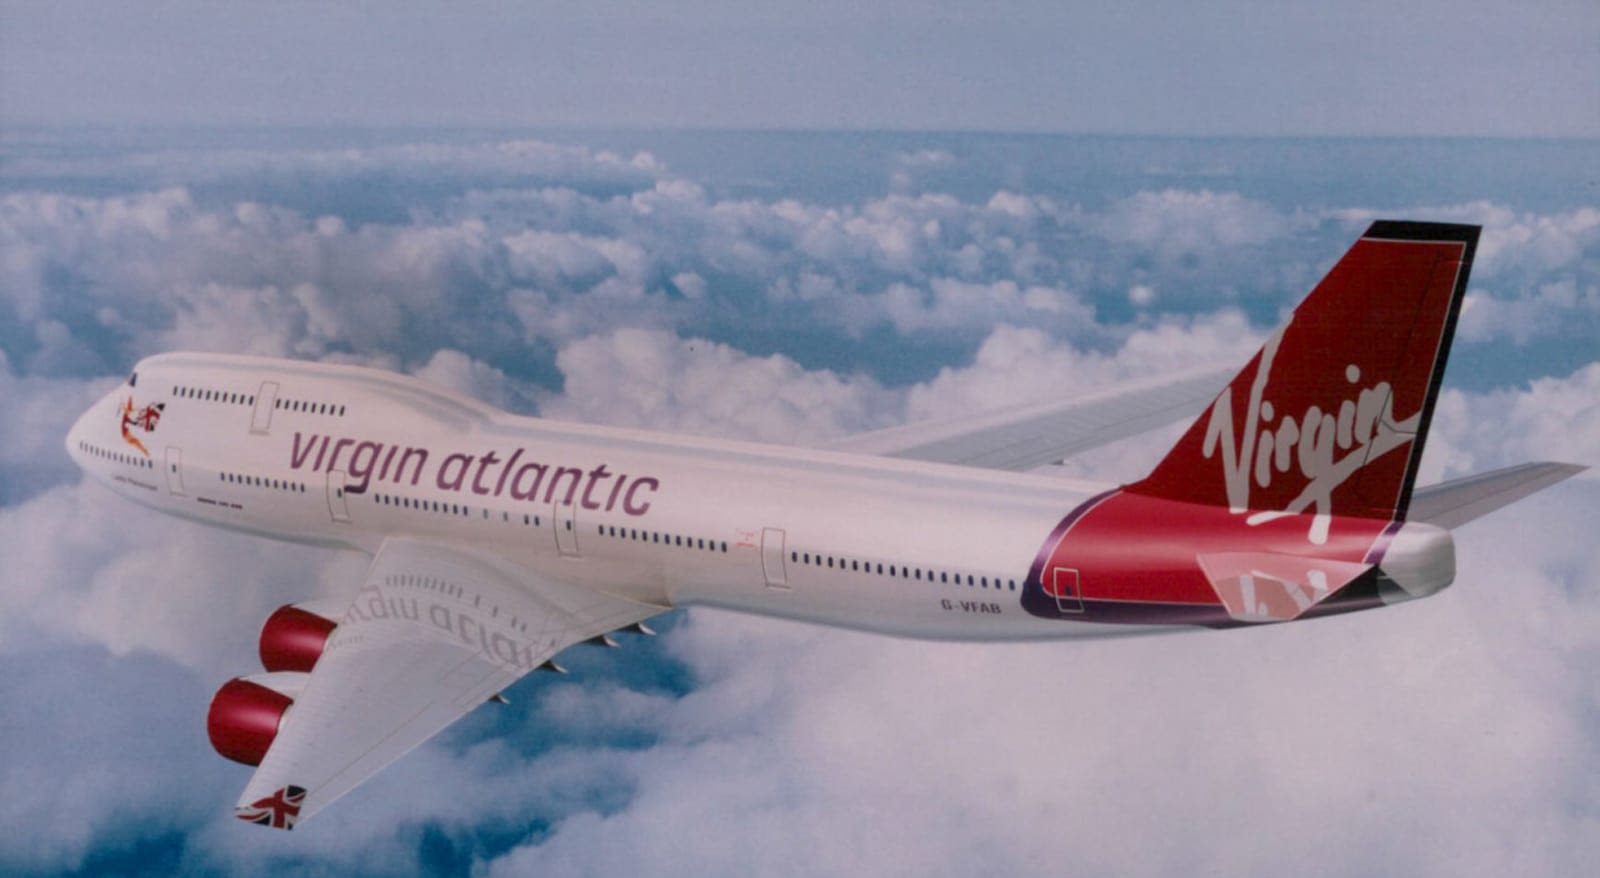 Virgin Atlantic plane in flight